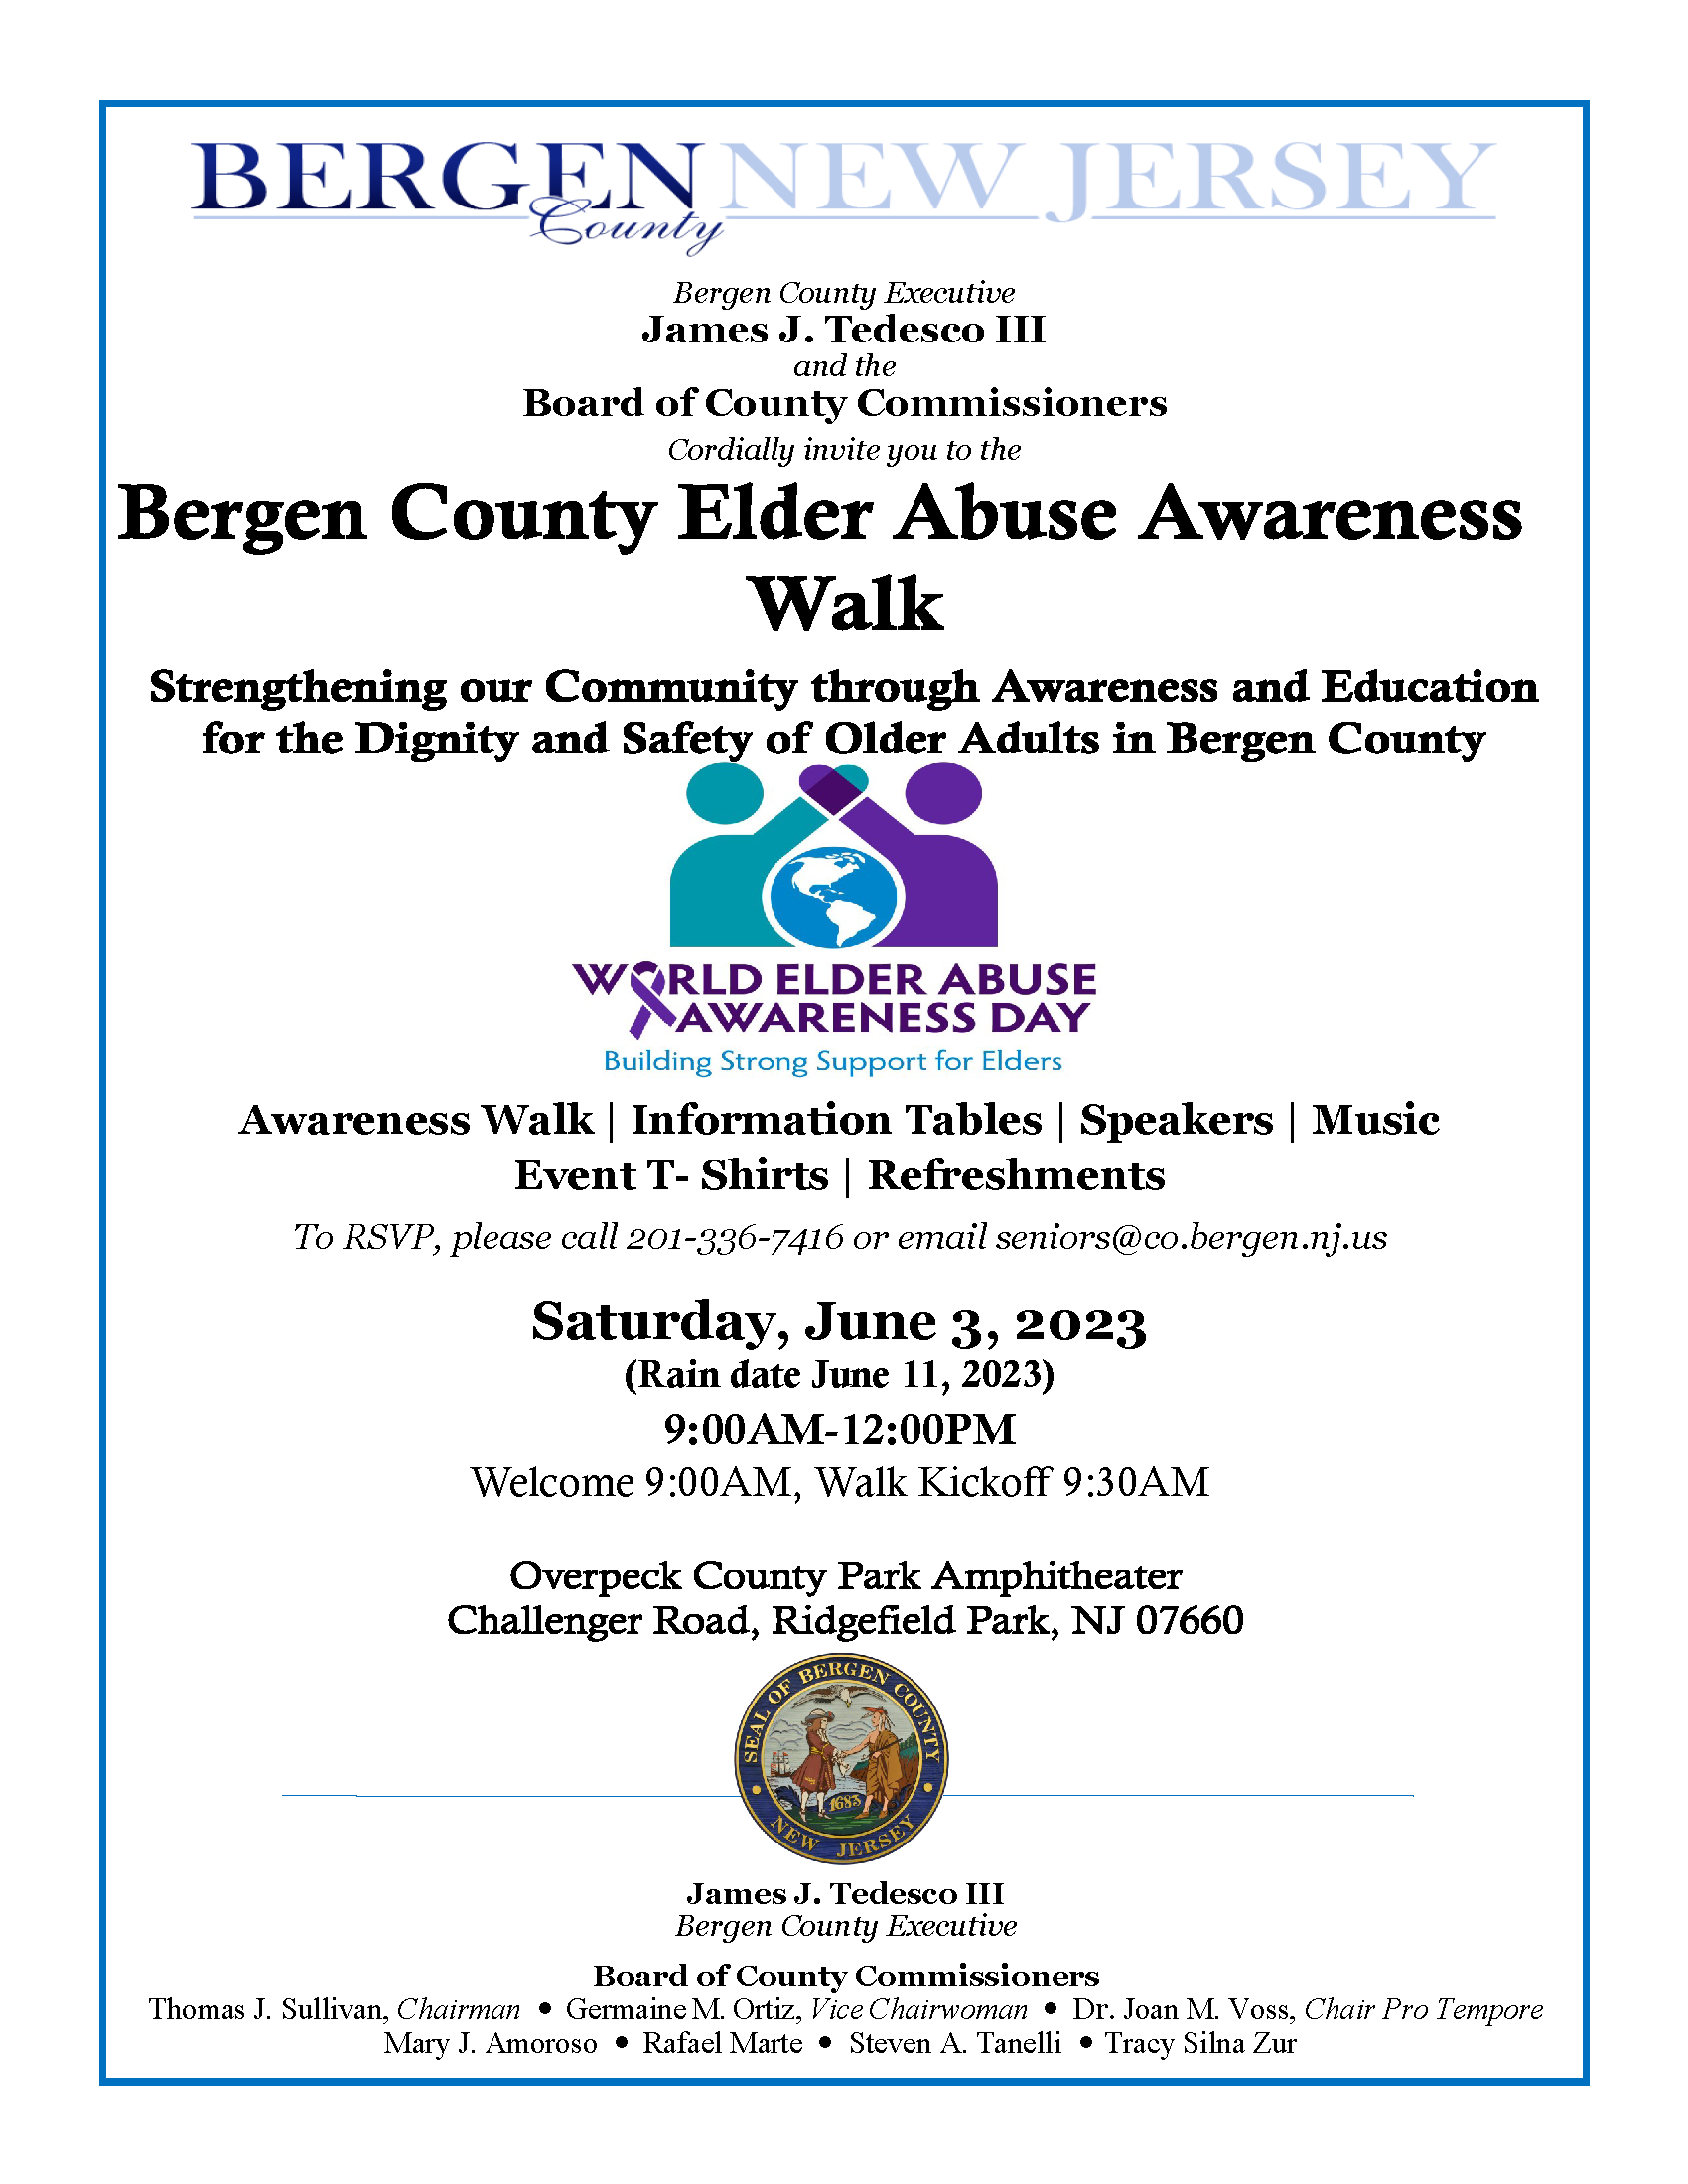 Elder Abuse Awareness Walk Flyer 2023